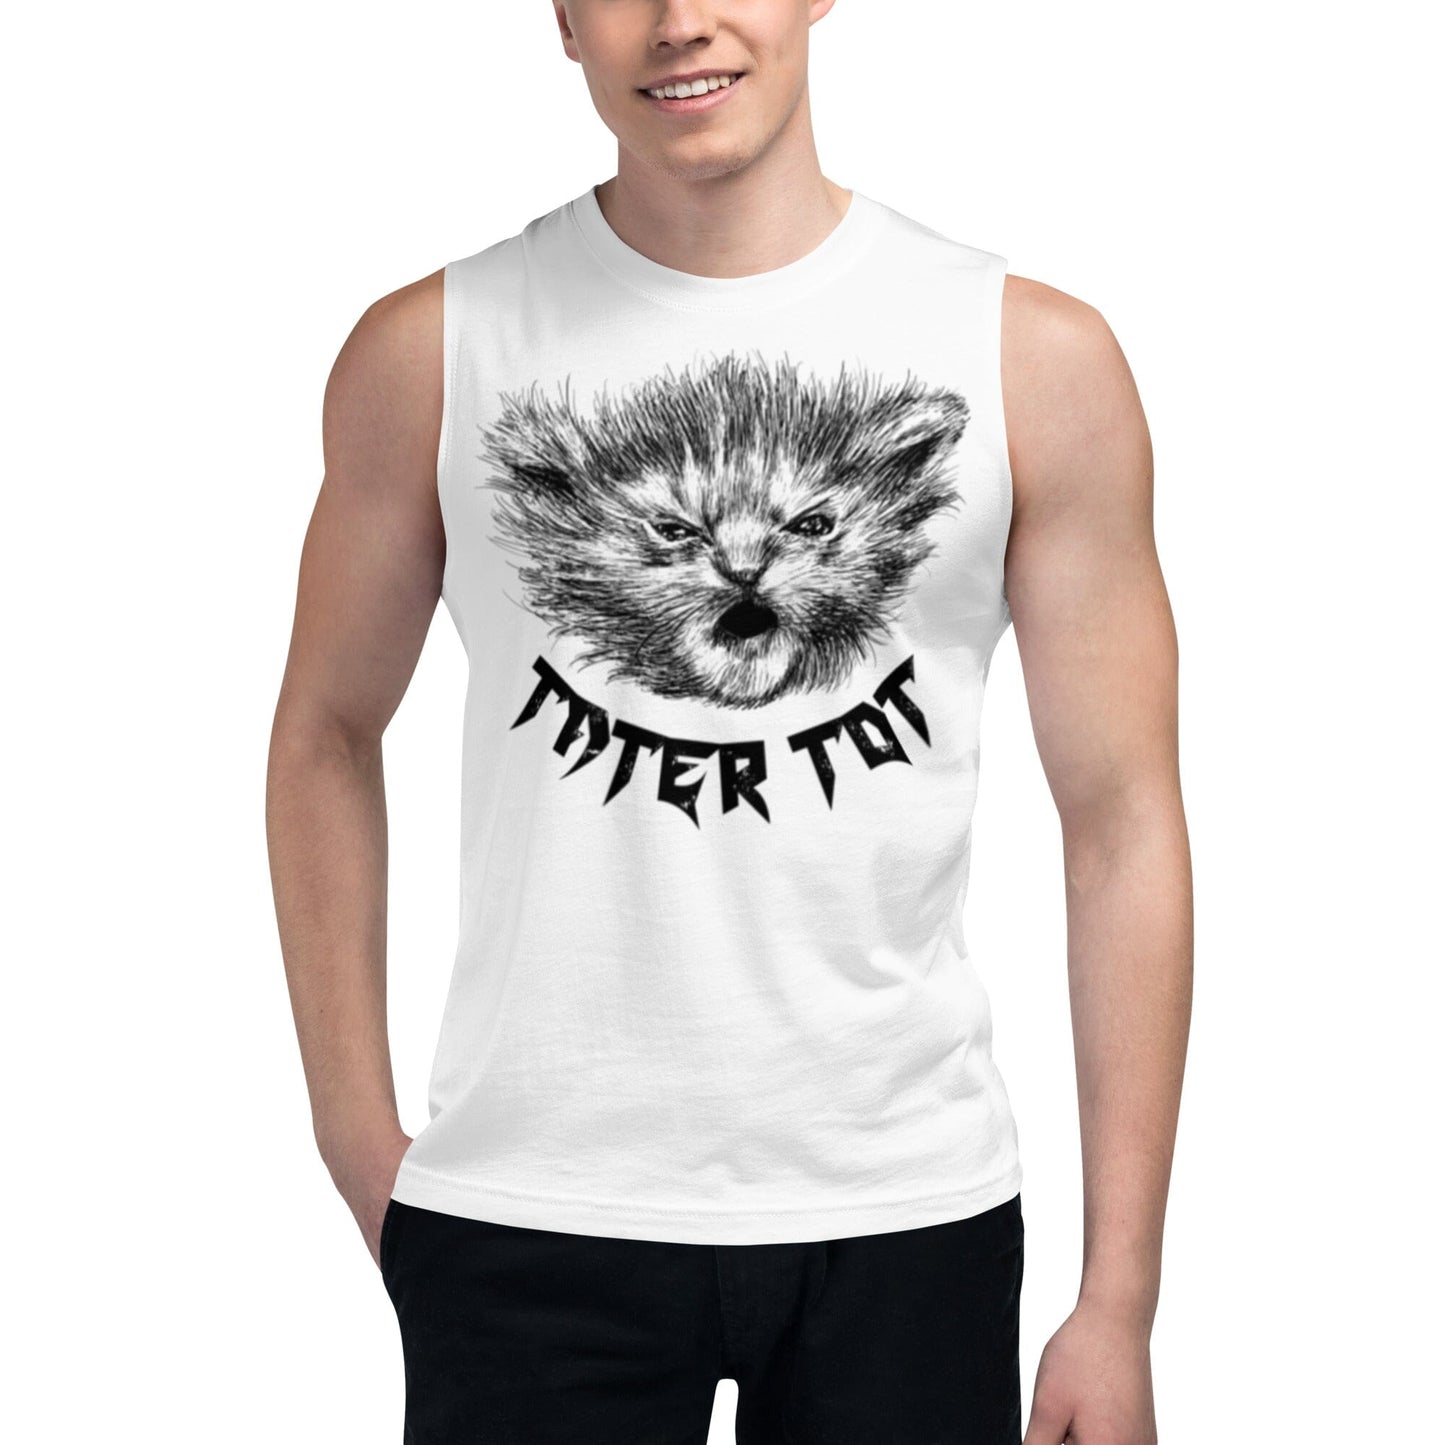 Metal Tater Tot Muscle Shirt [Unfoiled] (All net proceeds go to Kitty CrusAIDe) JoyousJoyfulJoyness S 